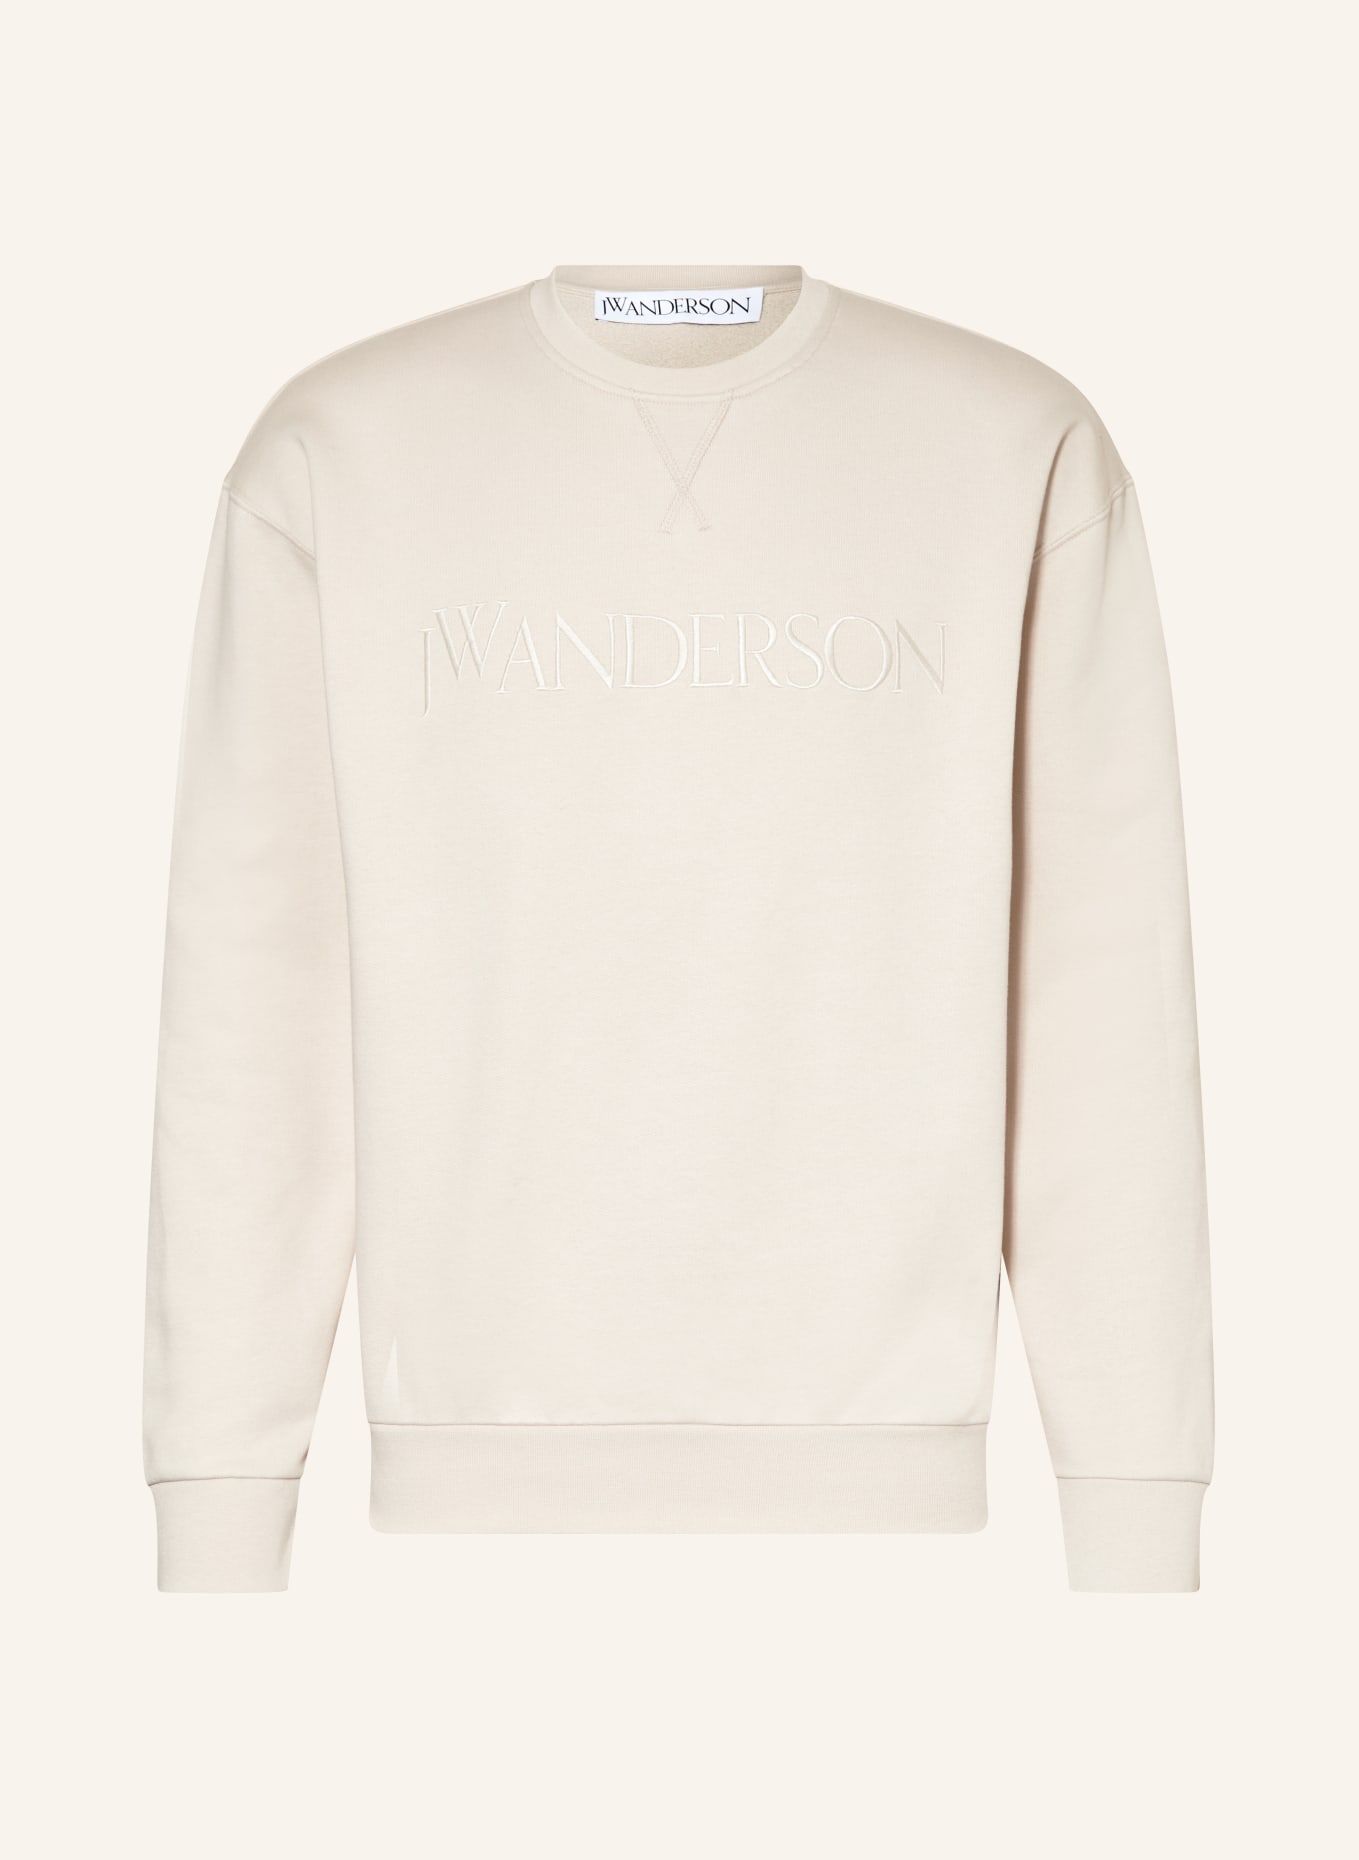 JW ANDERSON Sweatshirt, Farbe: BEIGE (Bild 1)